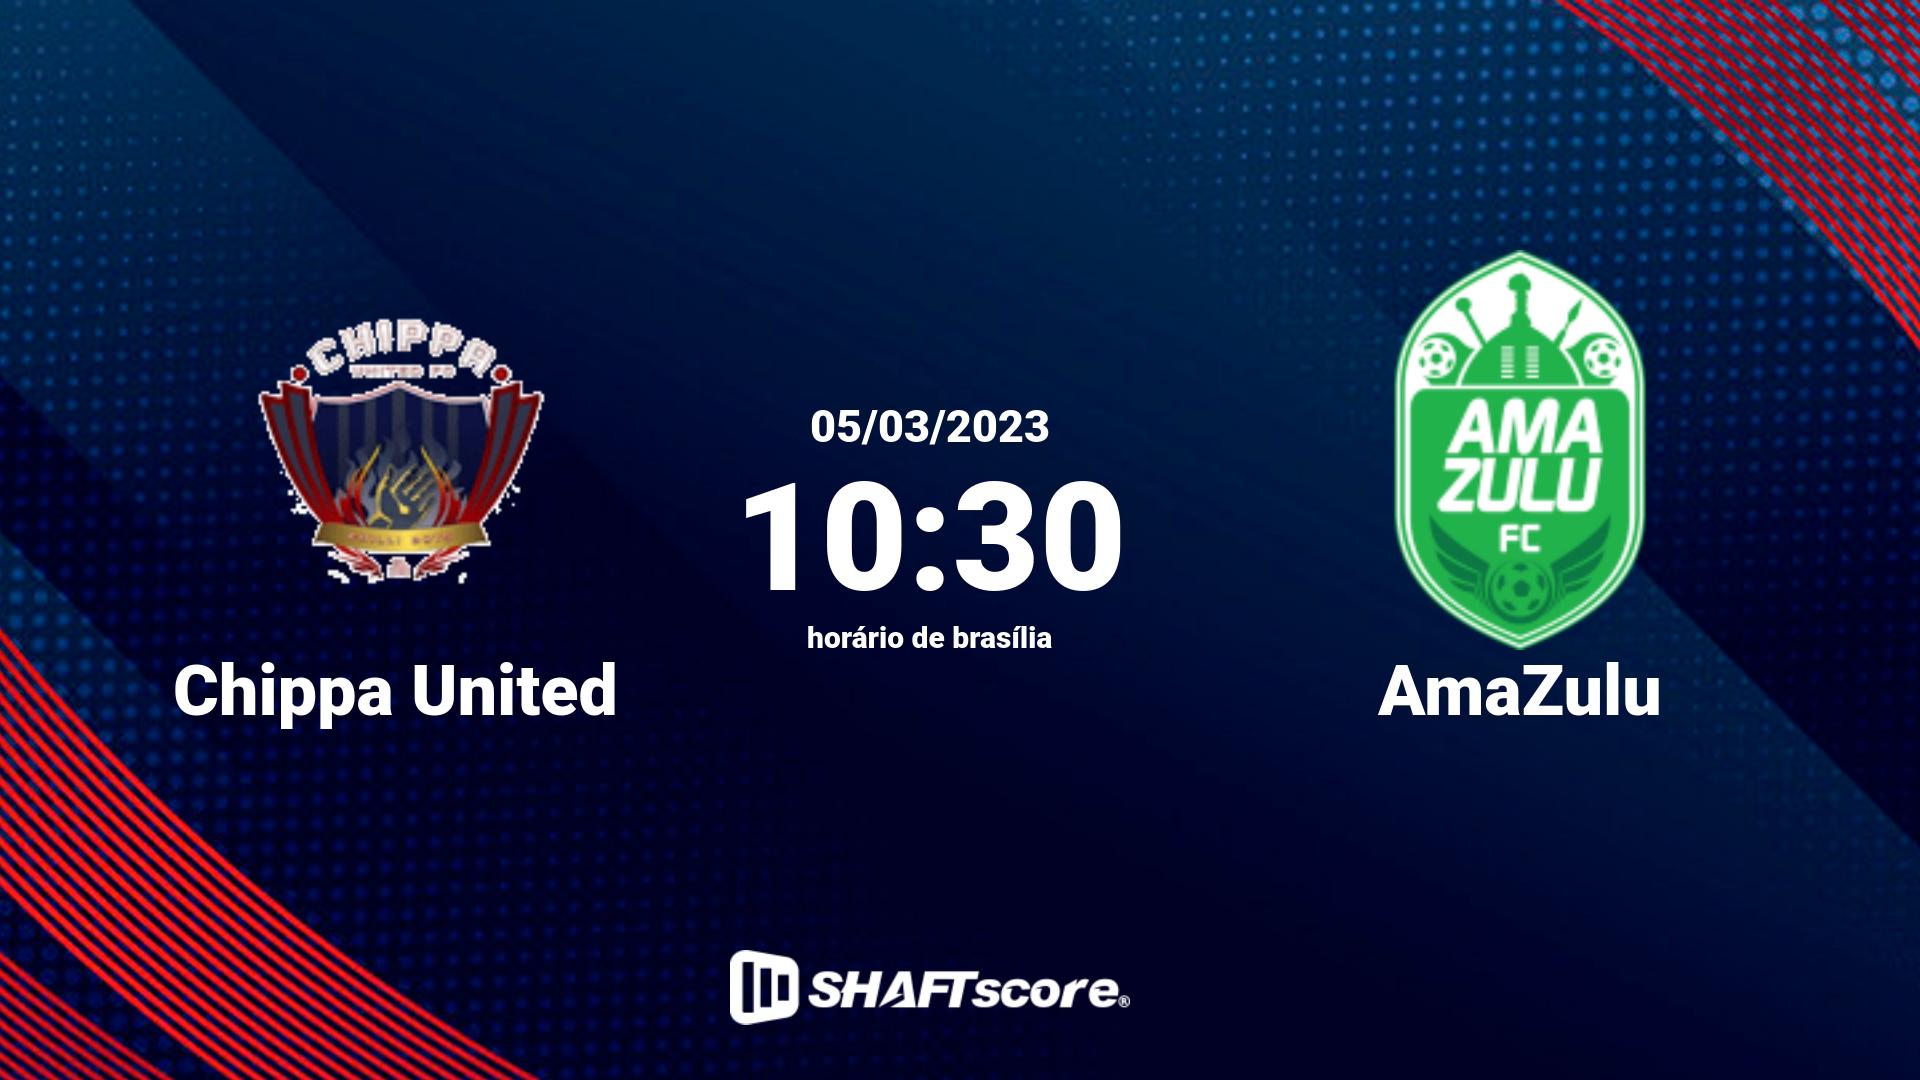 Estatísticas do jogo Chippa United vs AmaZulu 05.03 10:30